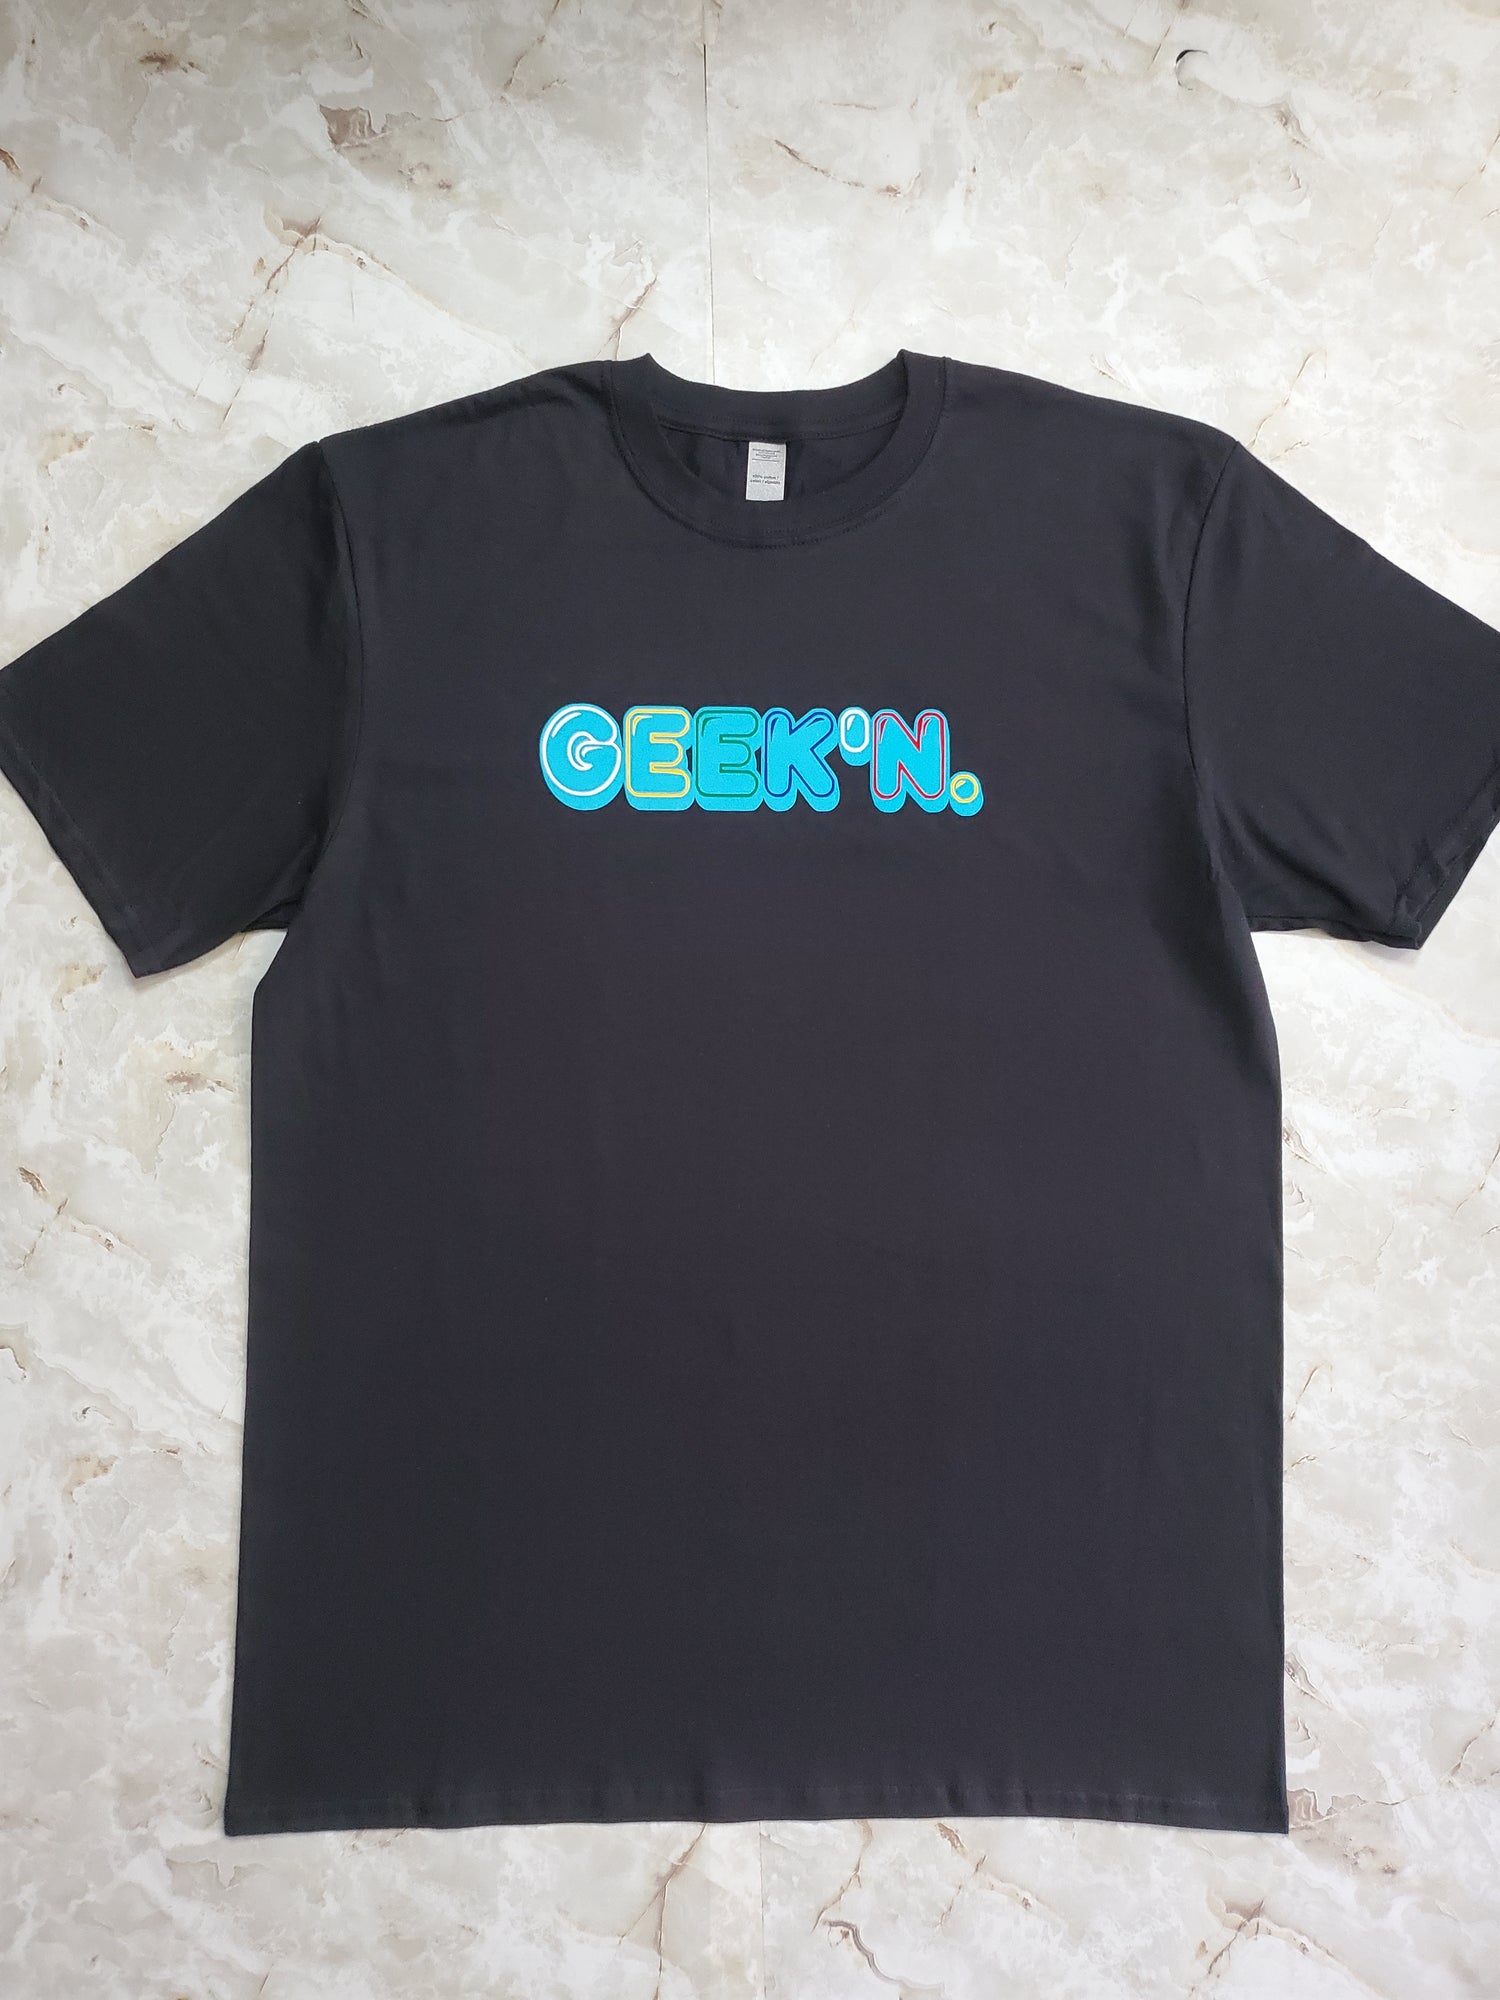 GEEK'N. T-Shirt (Black) - Centre Ave Clothing Co.